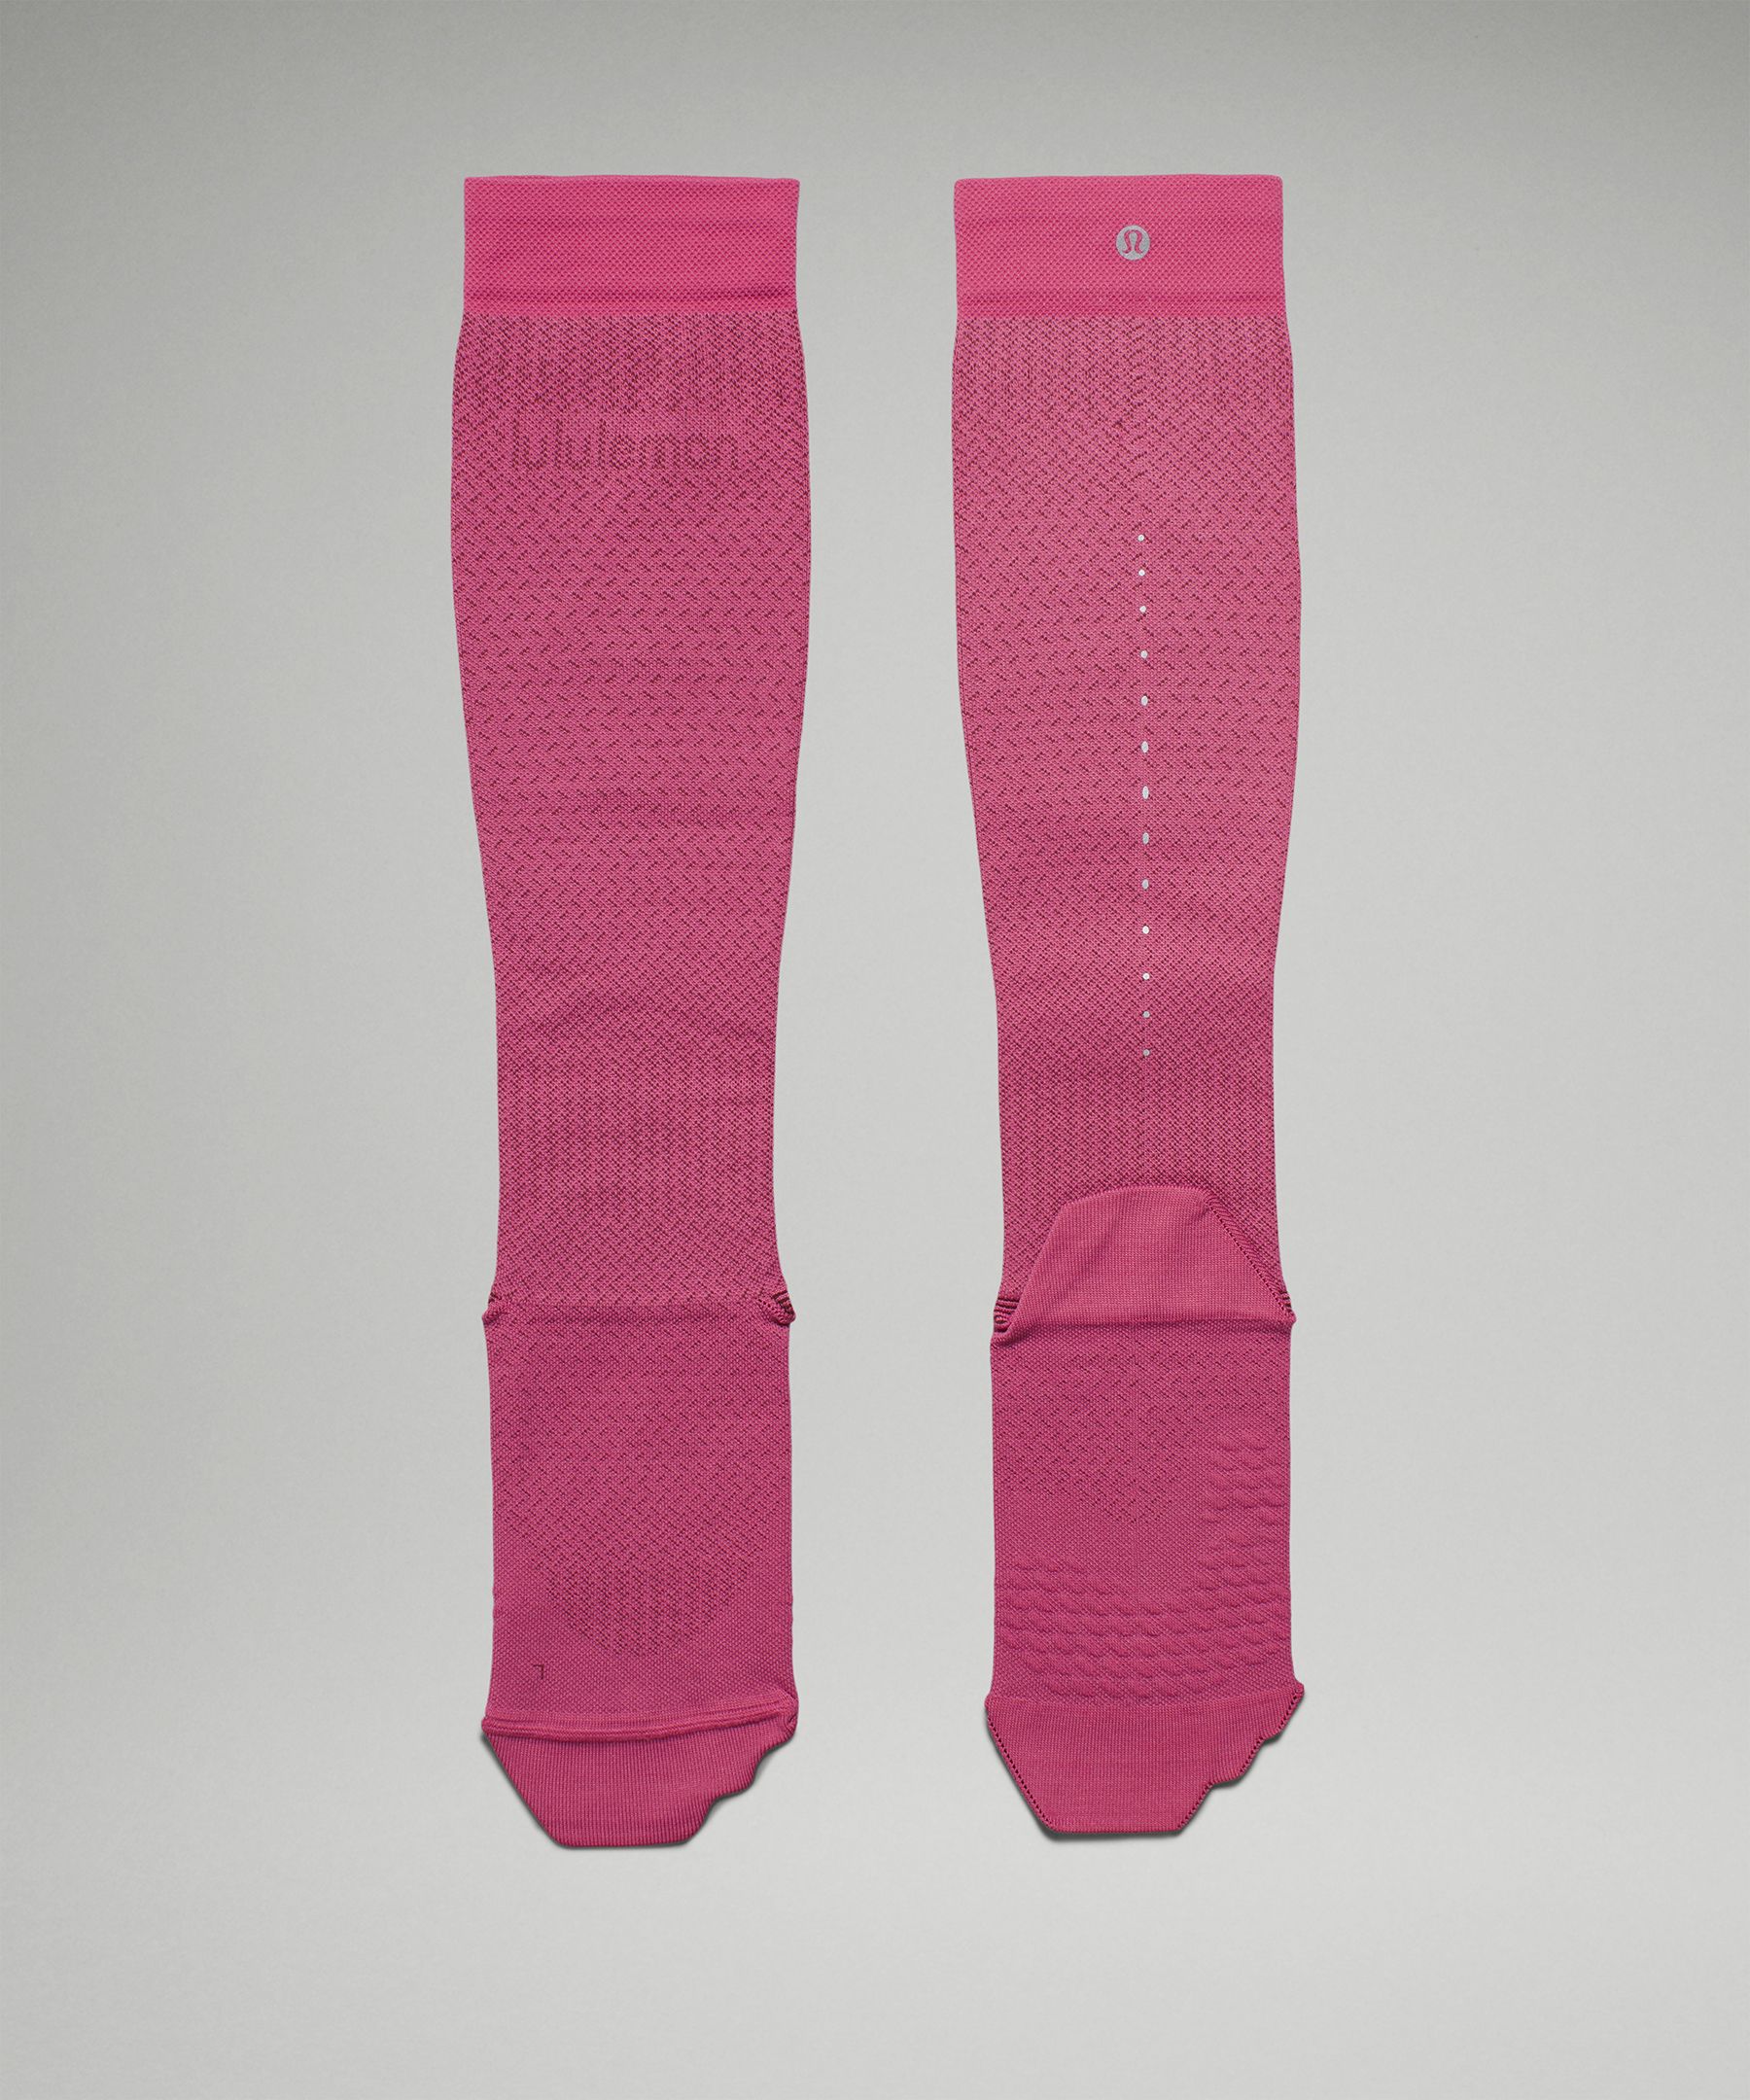 Lululemon Seawheeze Micropillow Compression Run Socks Knee High In Pink Lychee